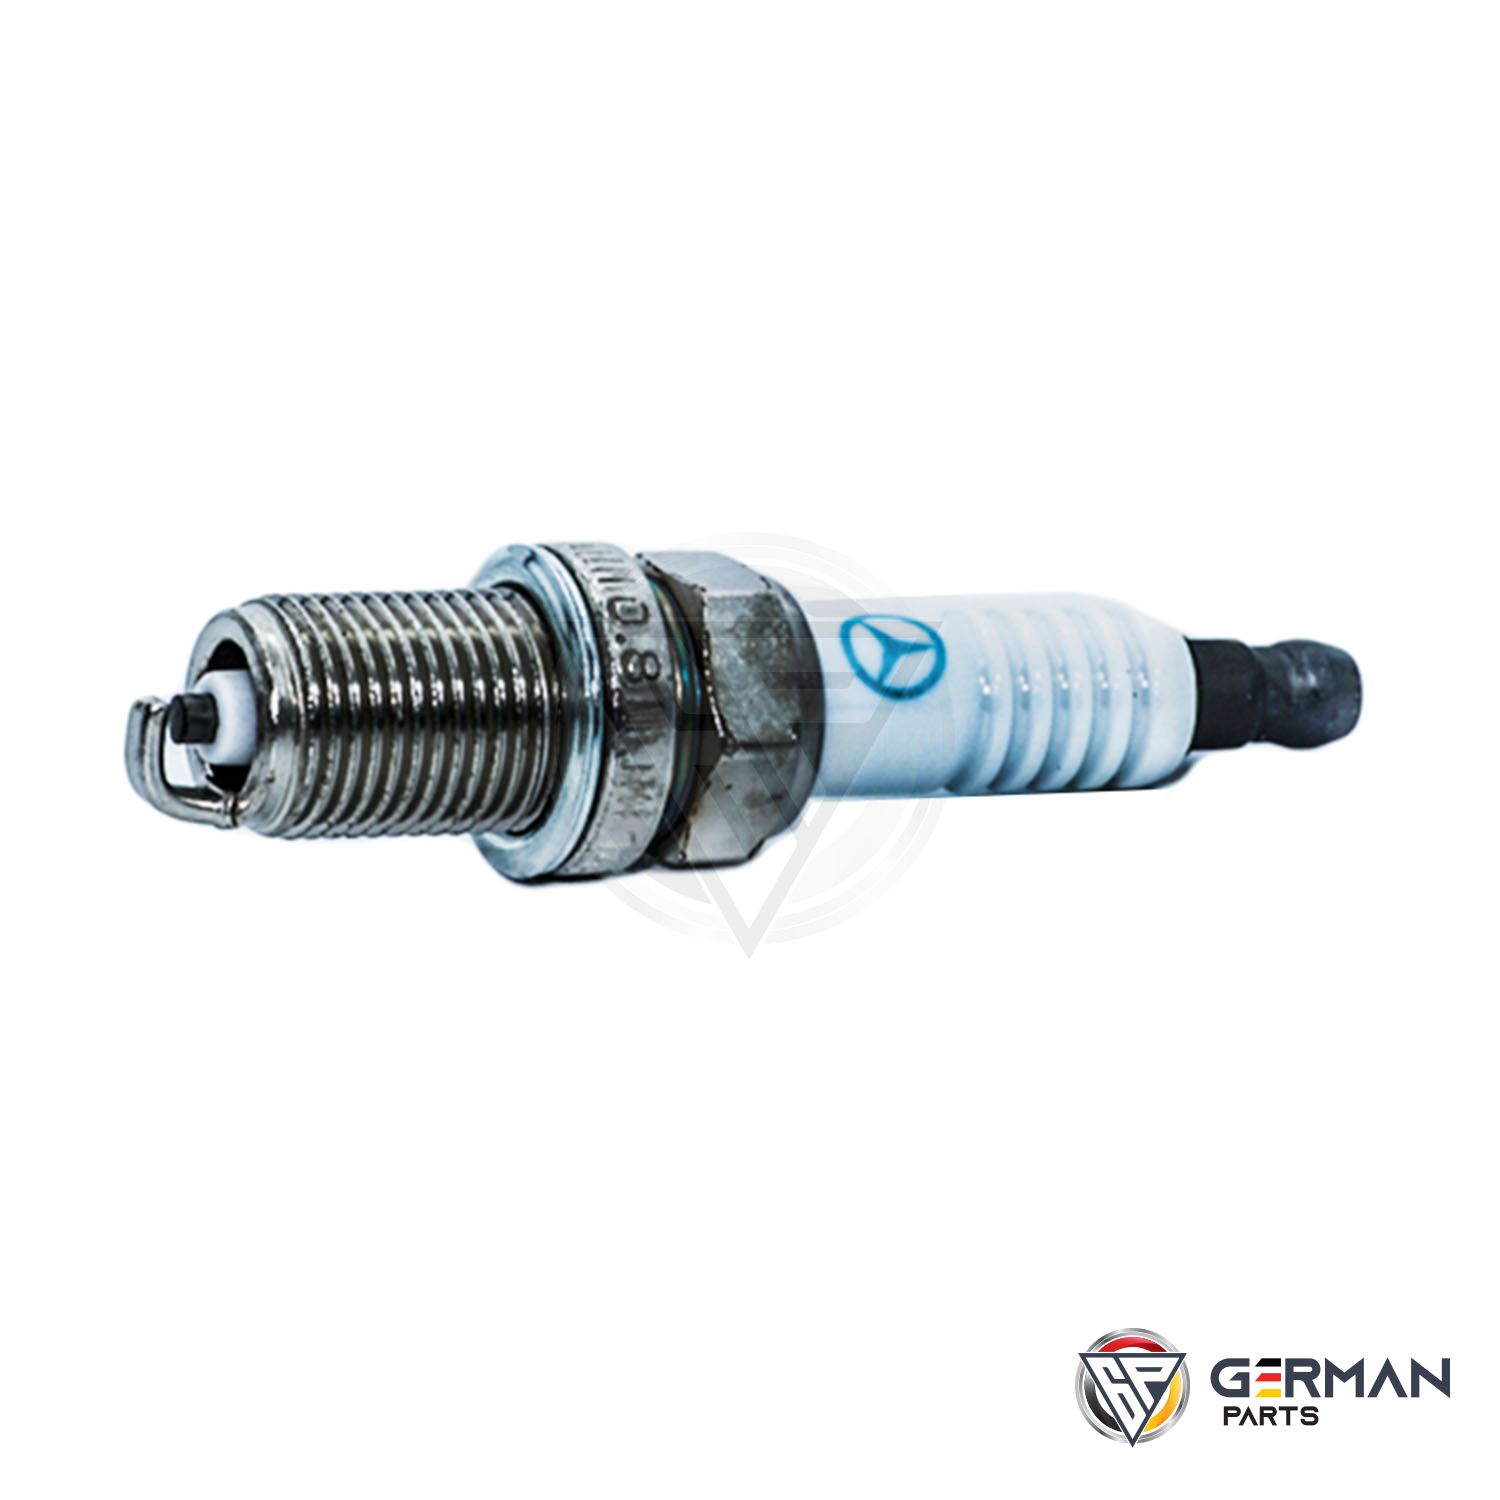 Buy Mercedes Benz Spark Plug 0031596803 - German Parts